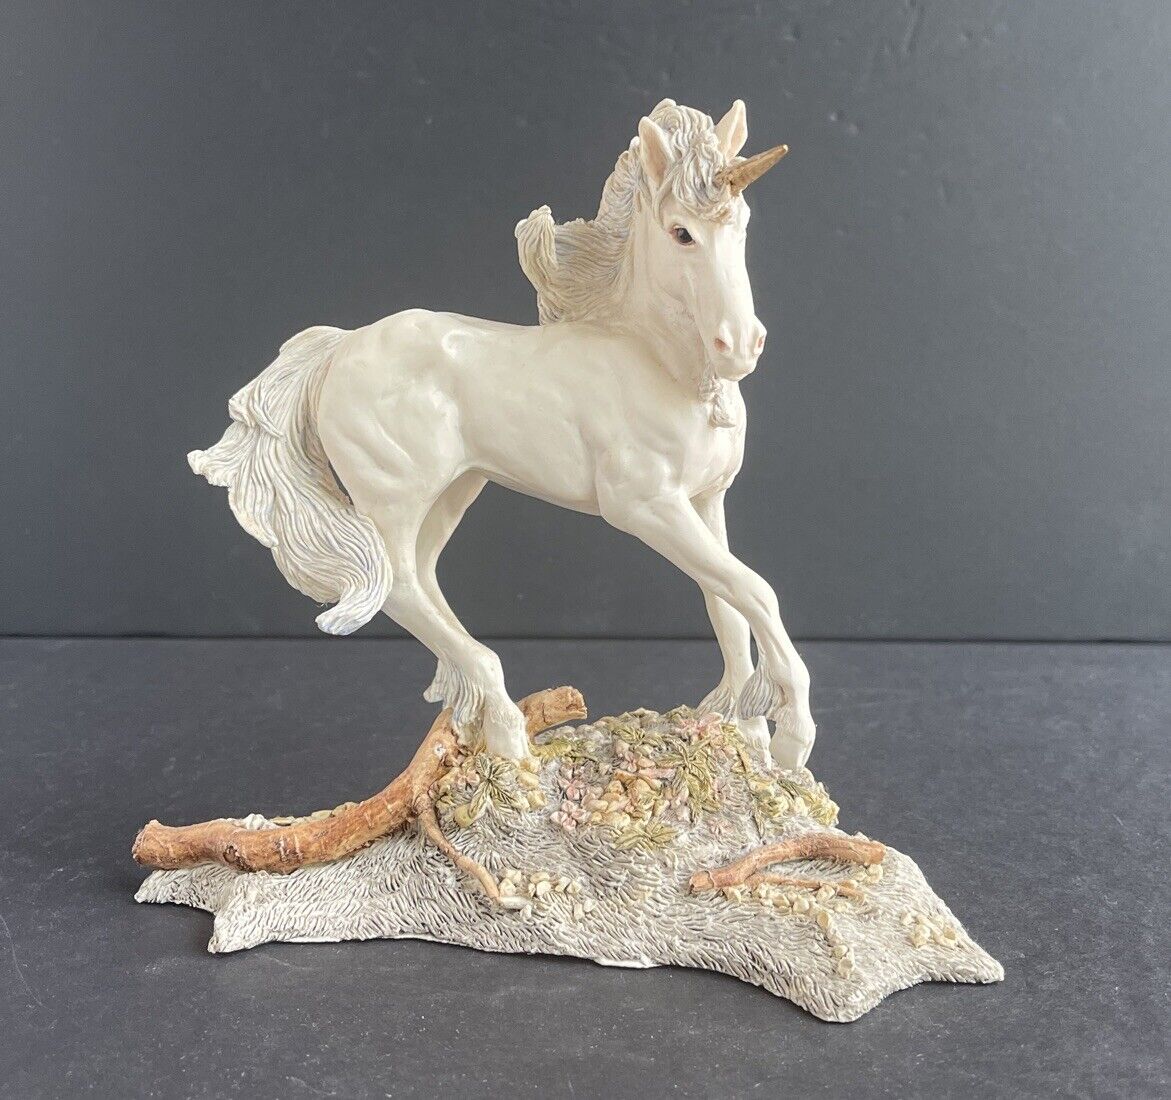 1998 Fables “Endeavor” Unicorn Figurine - Limited Edition Holland Studio